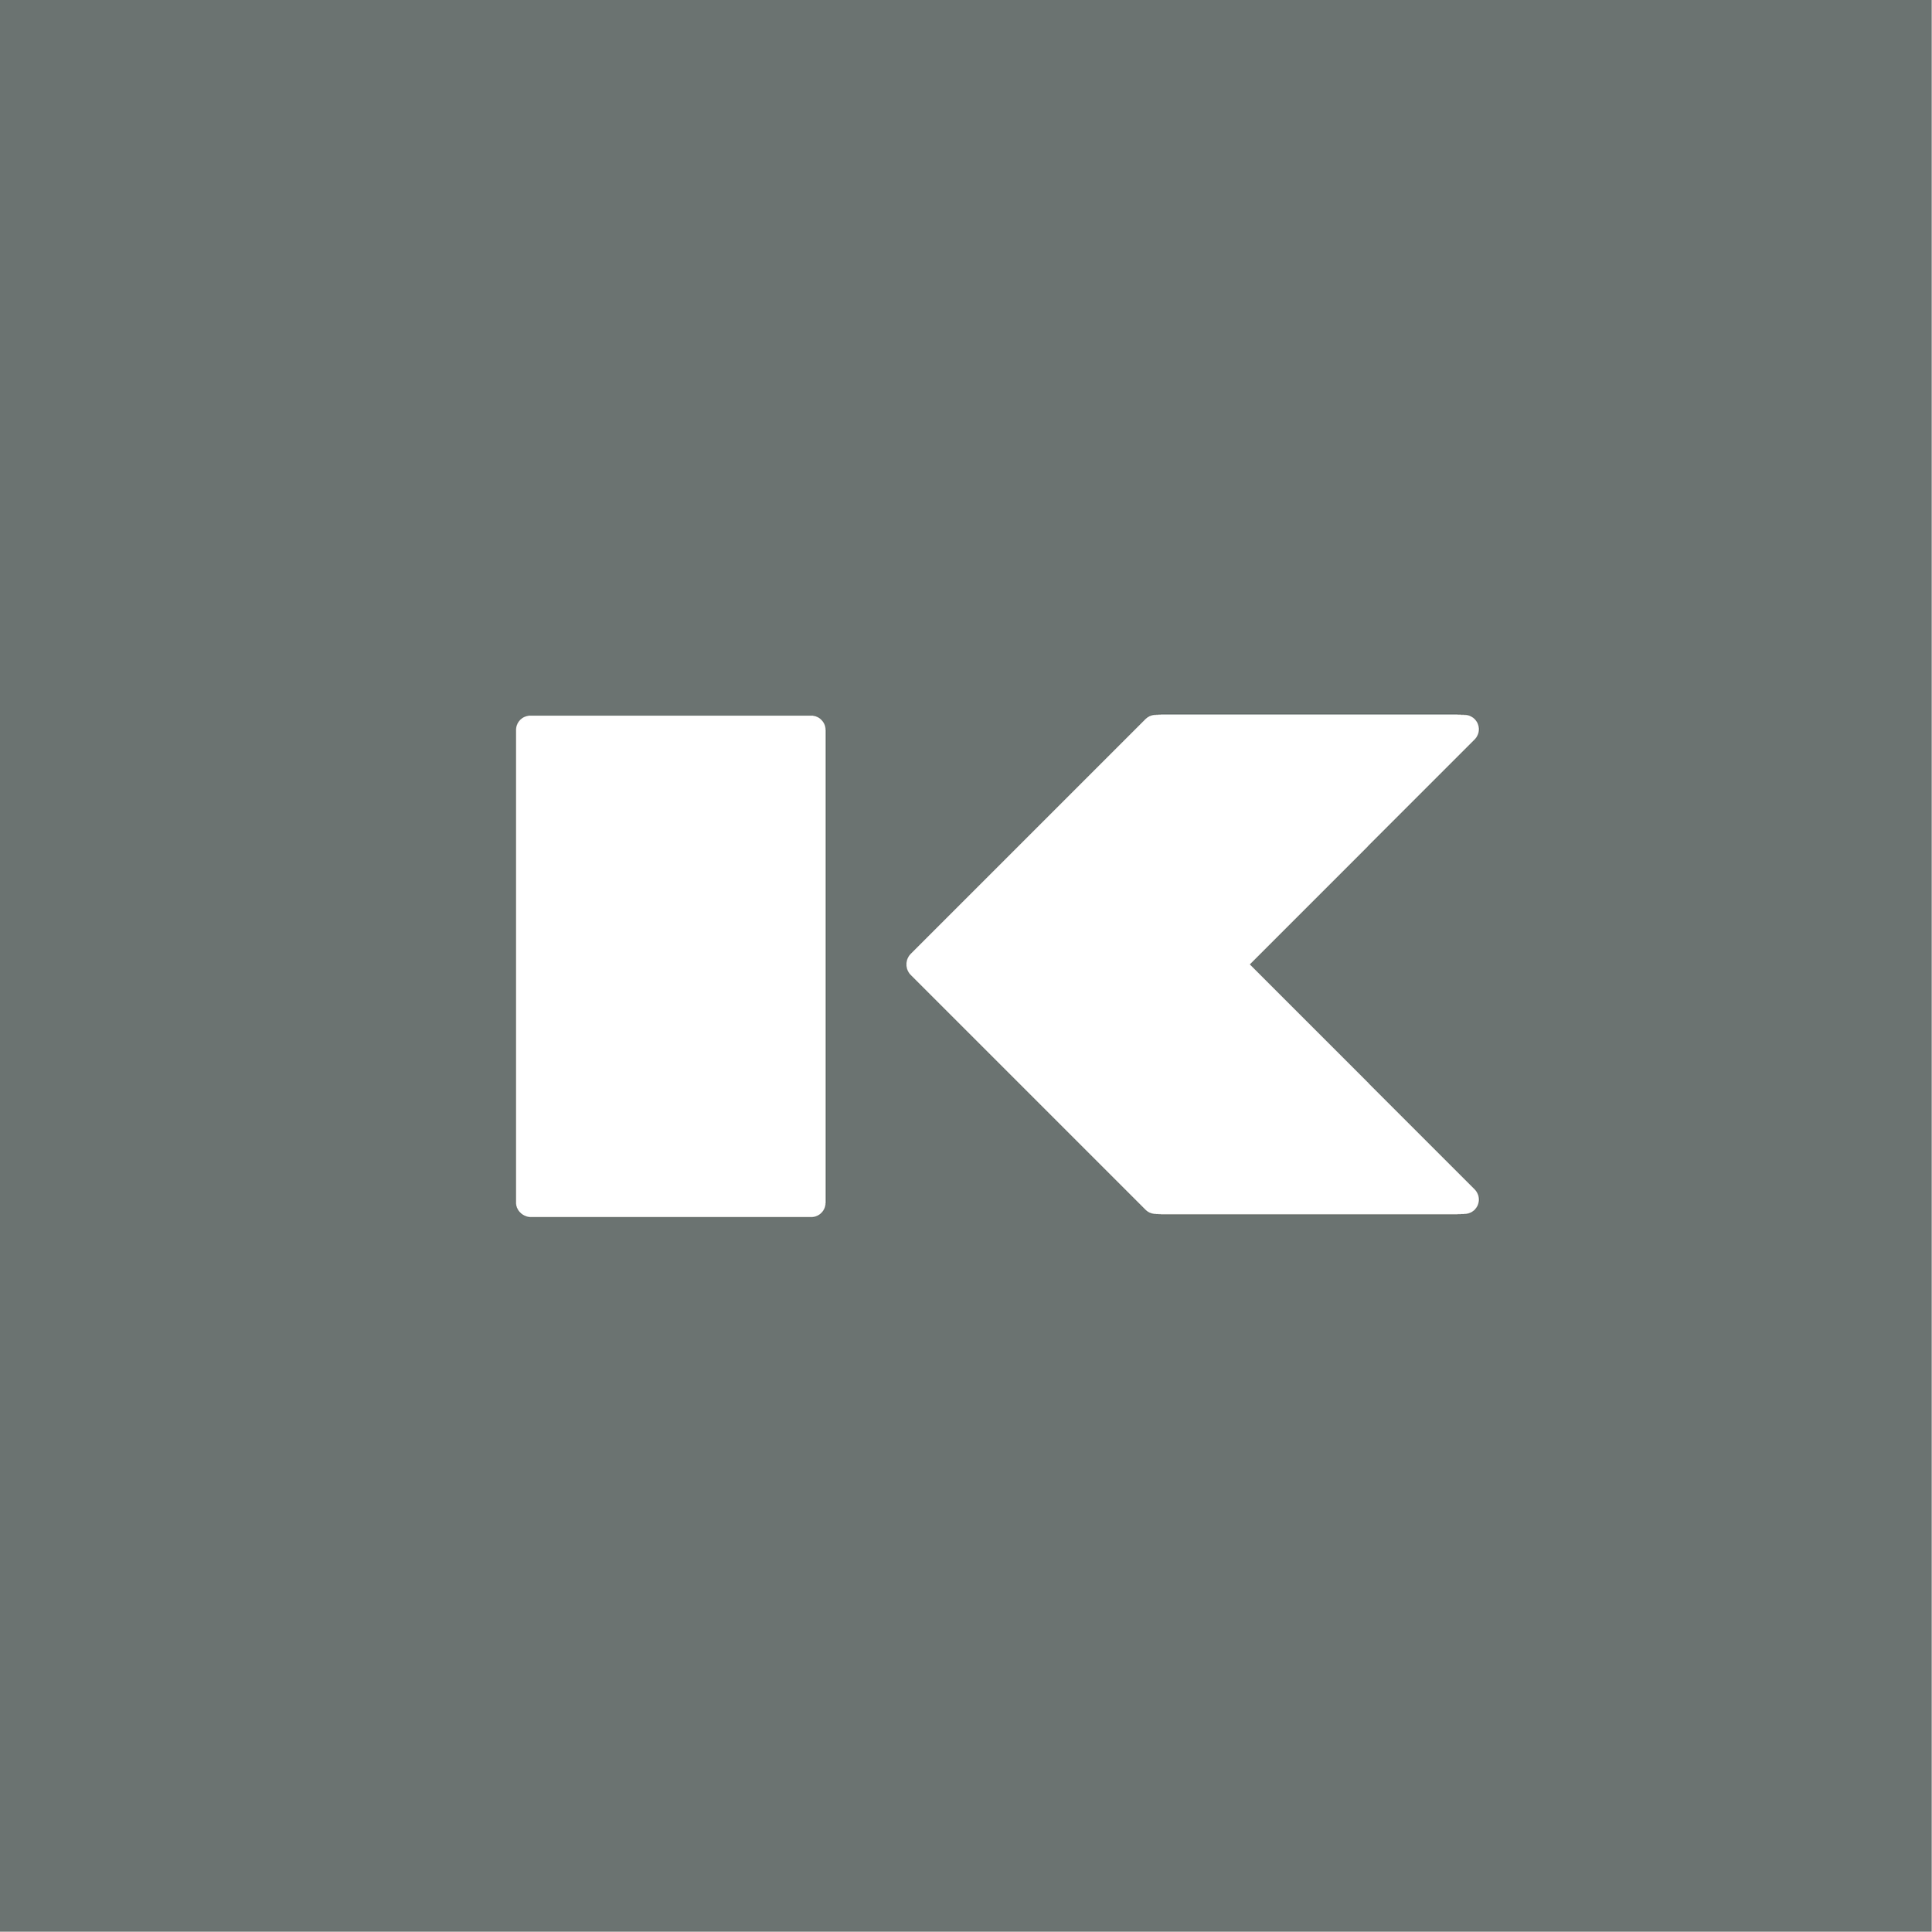 Logos_KM_NEW.png